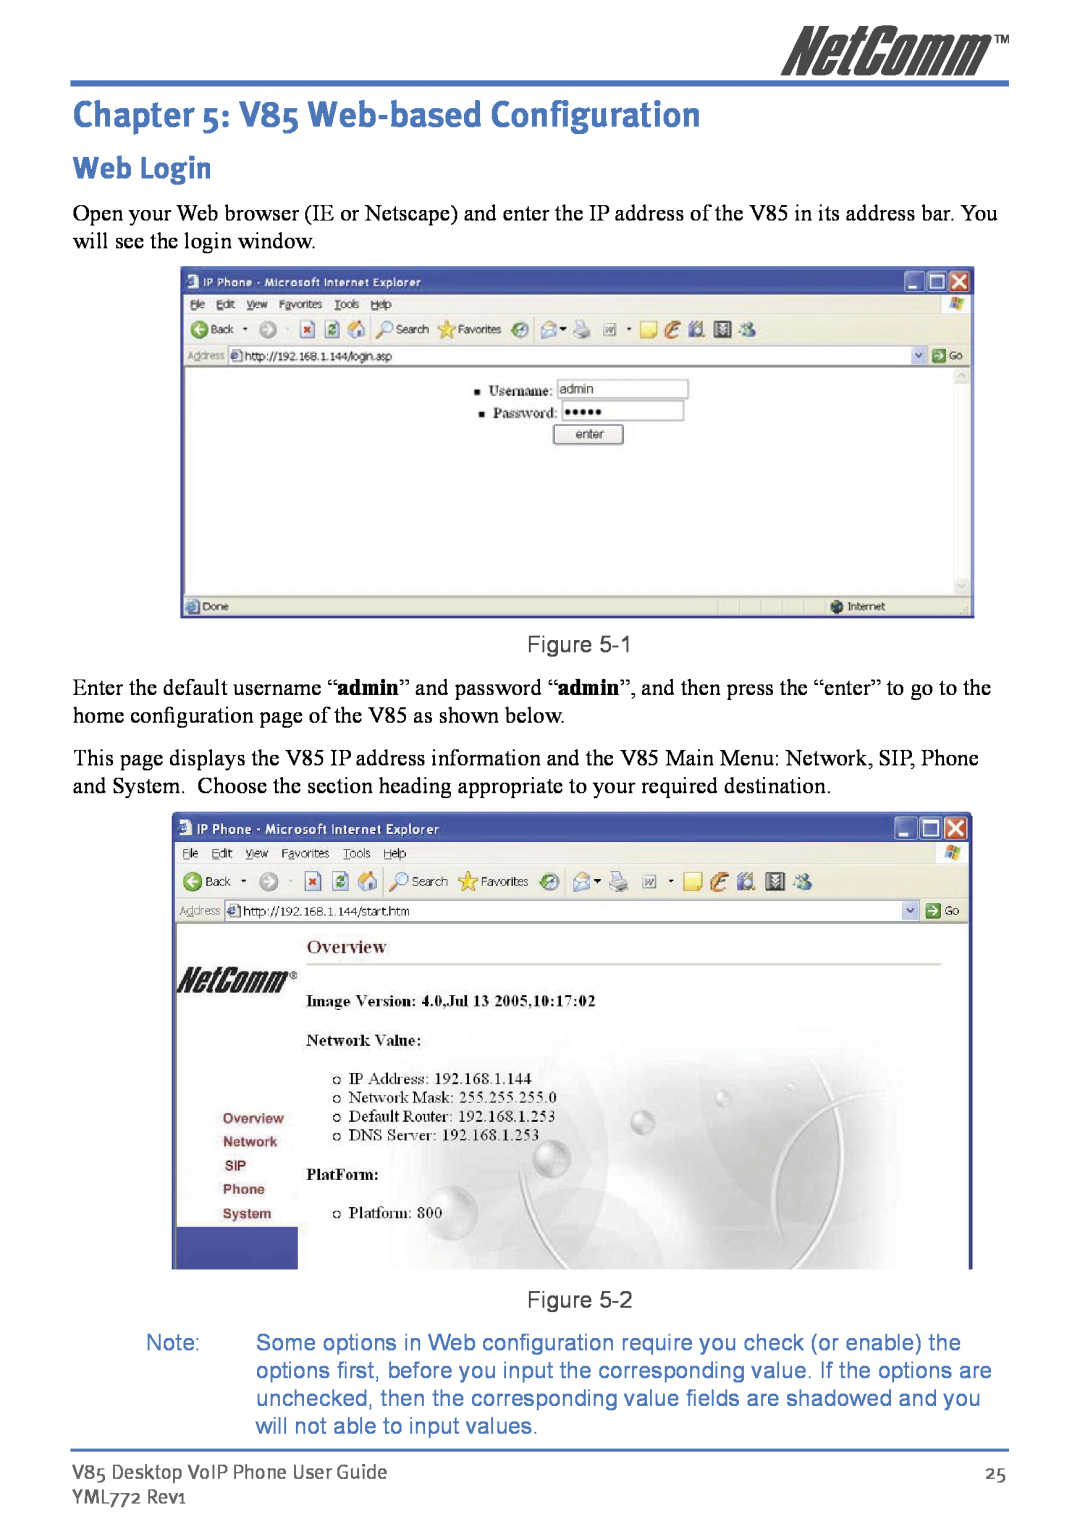 NetComm manual V85 Web-based Configuration, Web Login 